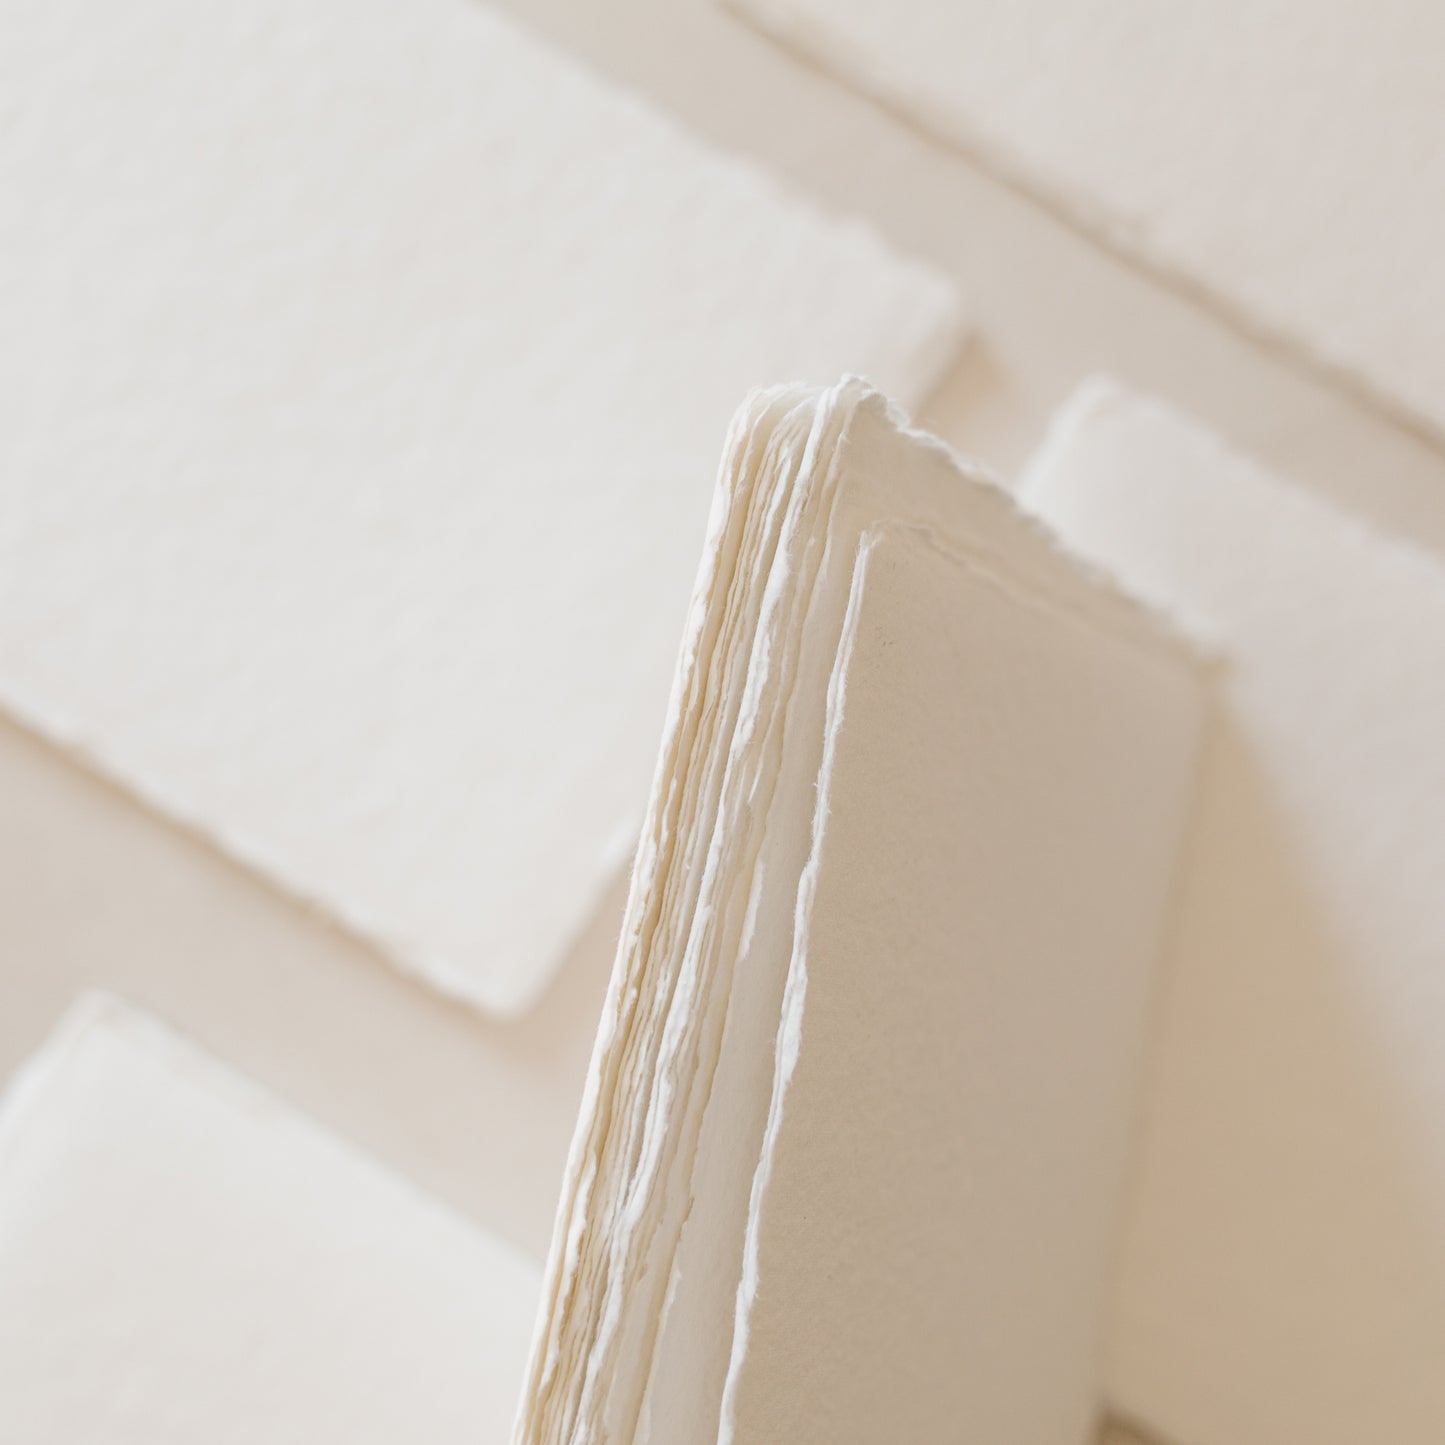 A5 – White Handmade Paper